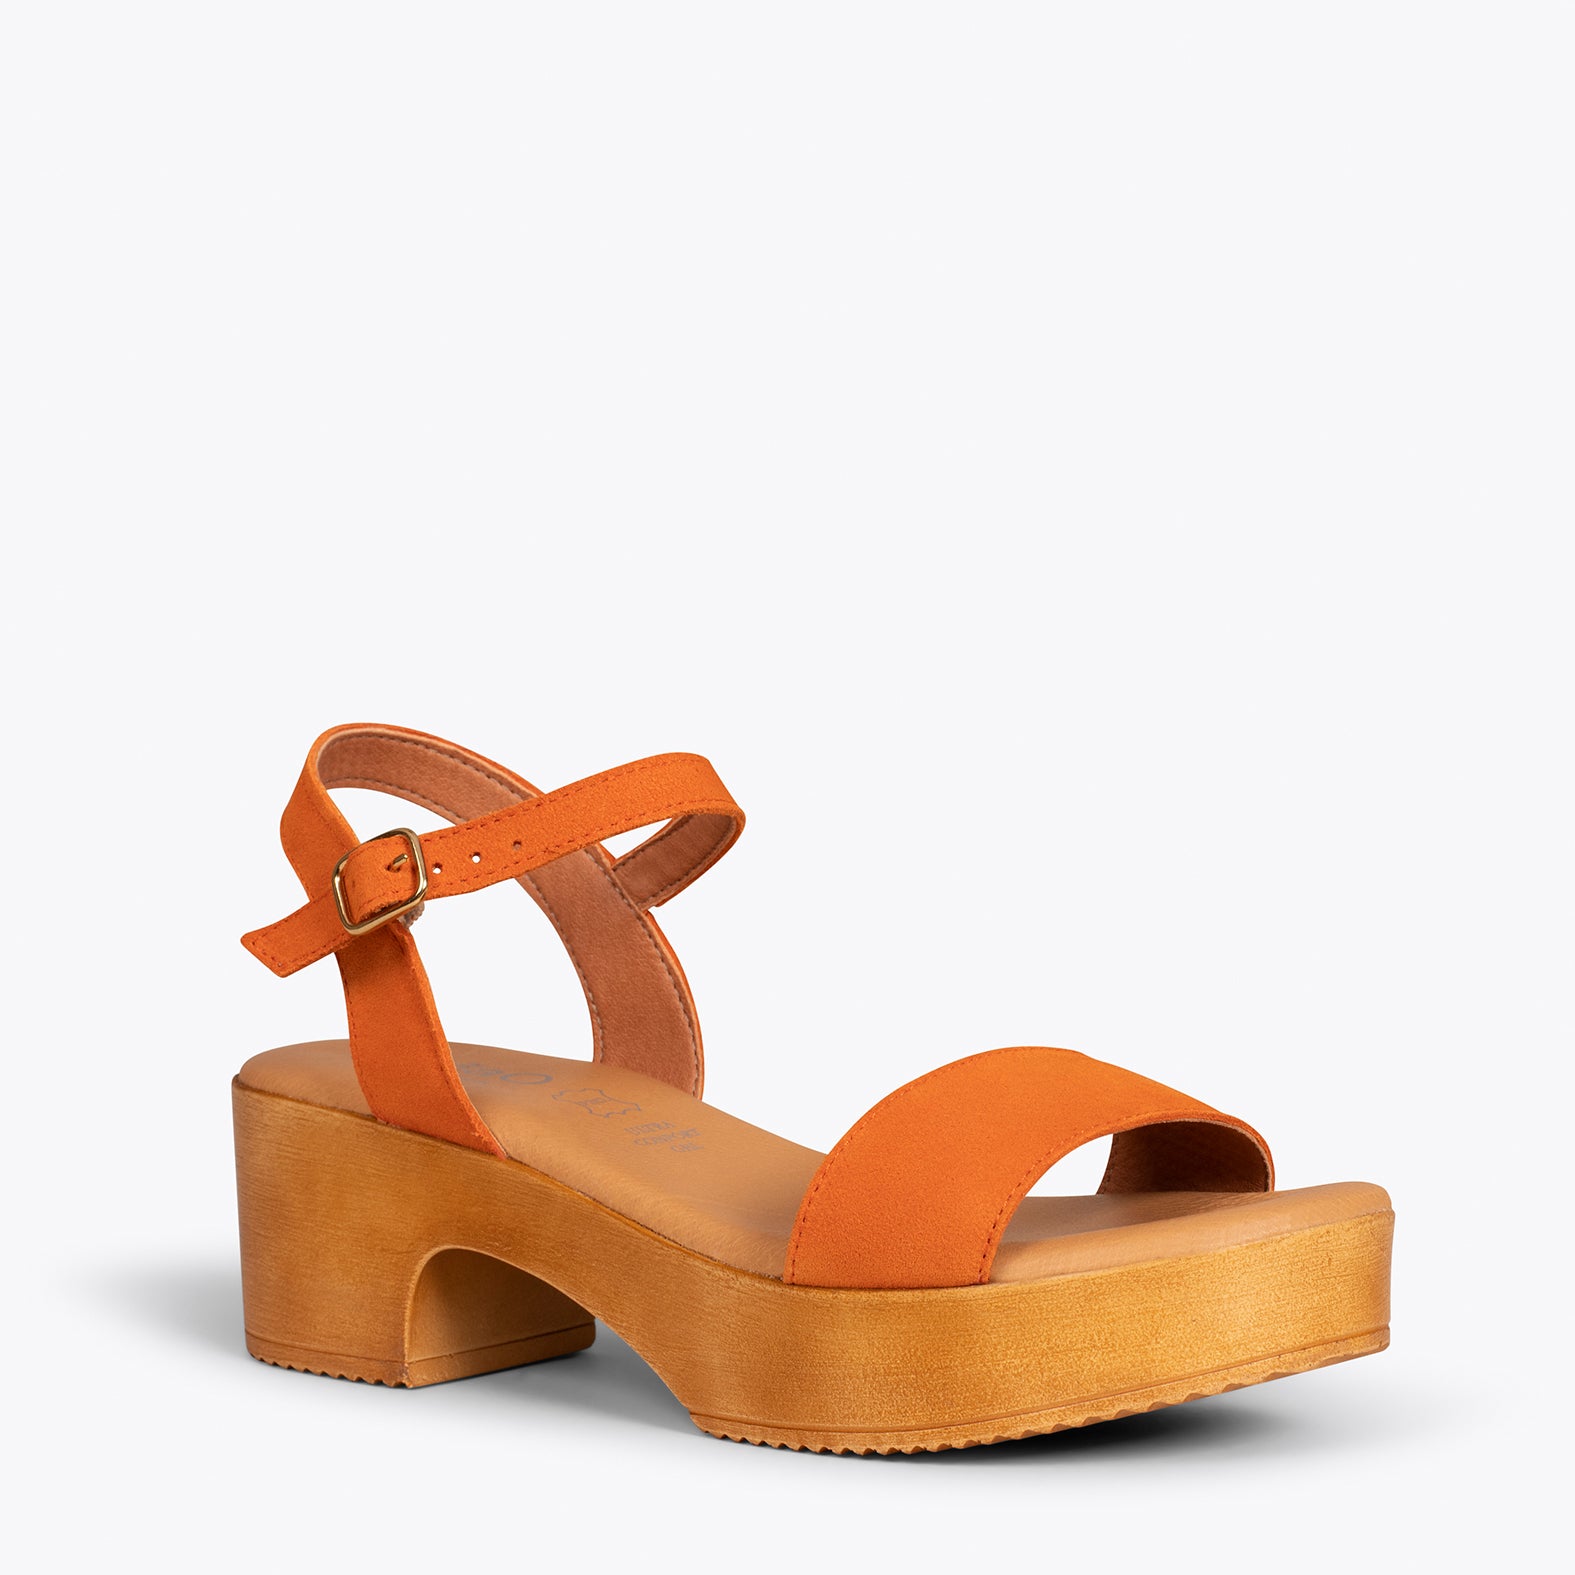 CALA – ORANGE sandals with platform